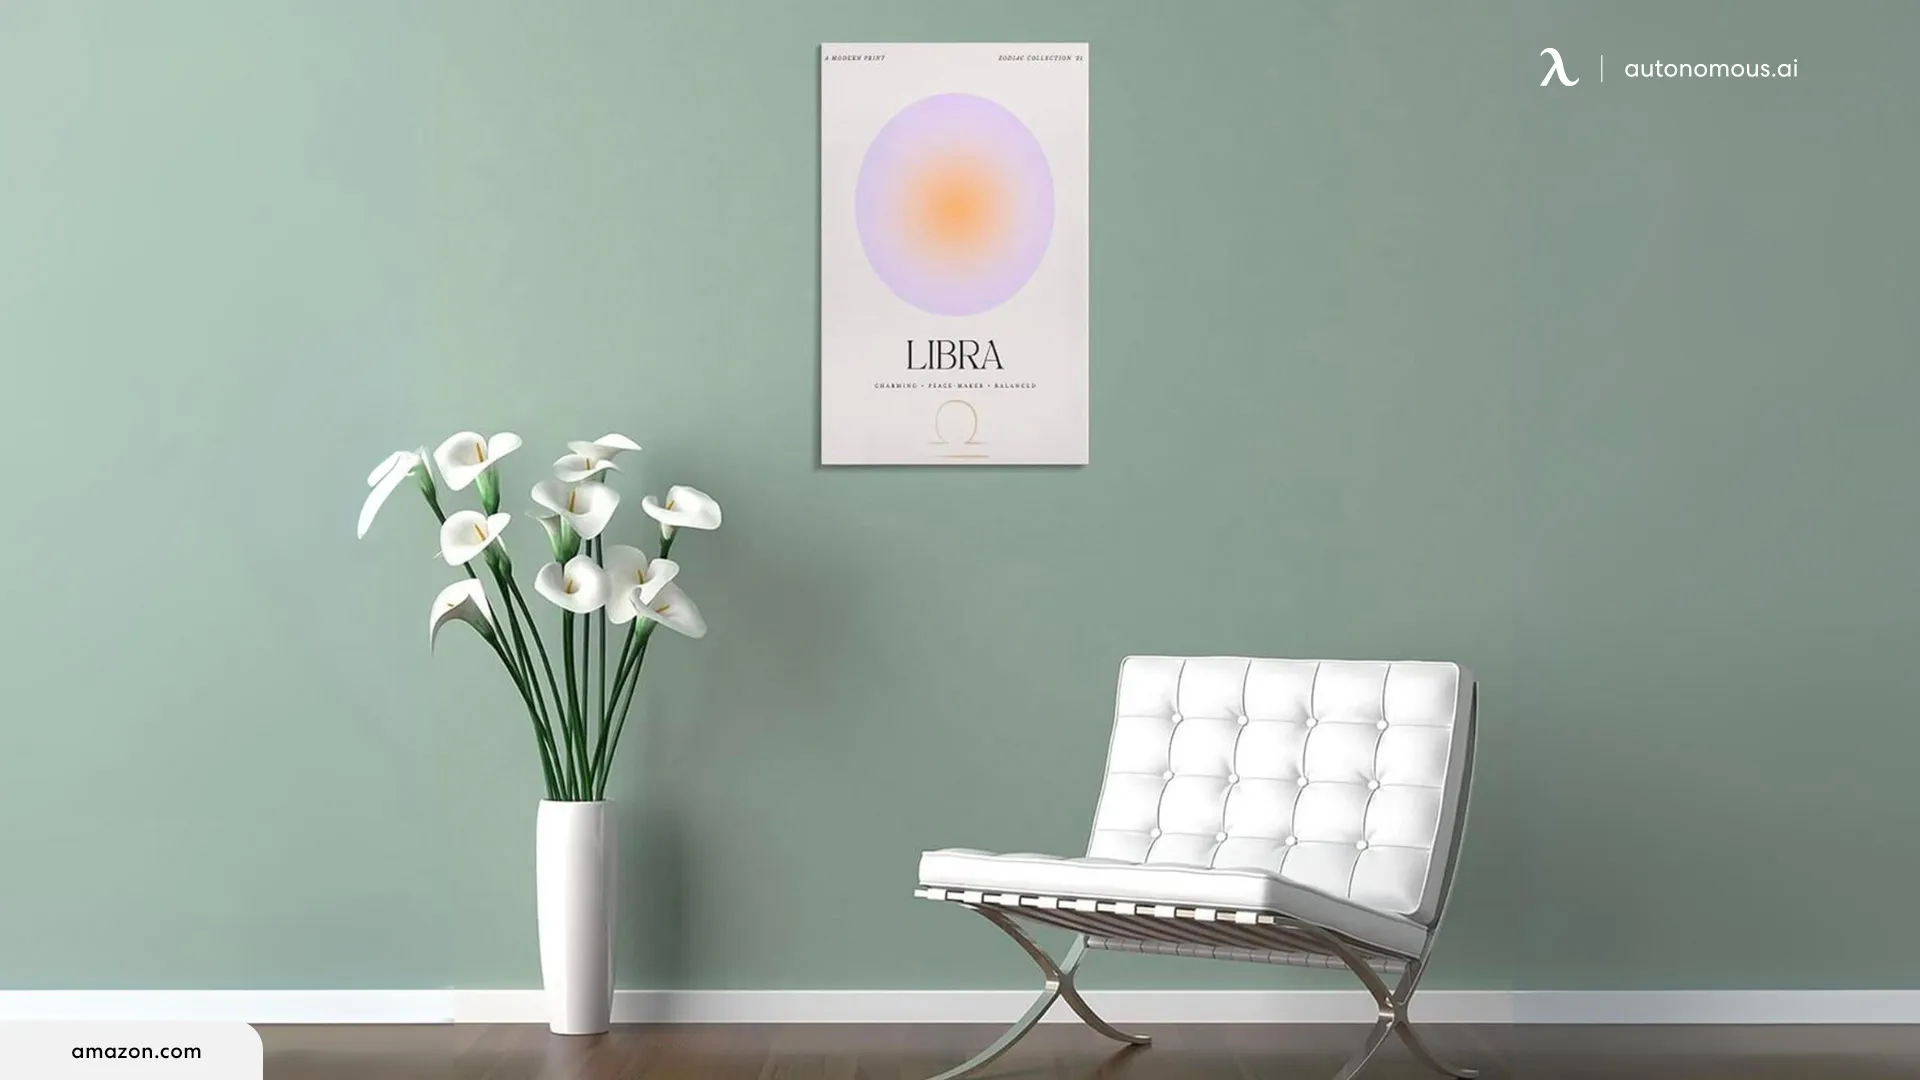 Libra office zodiac signs